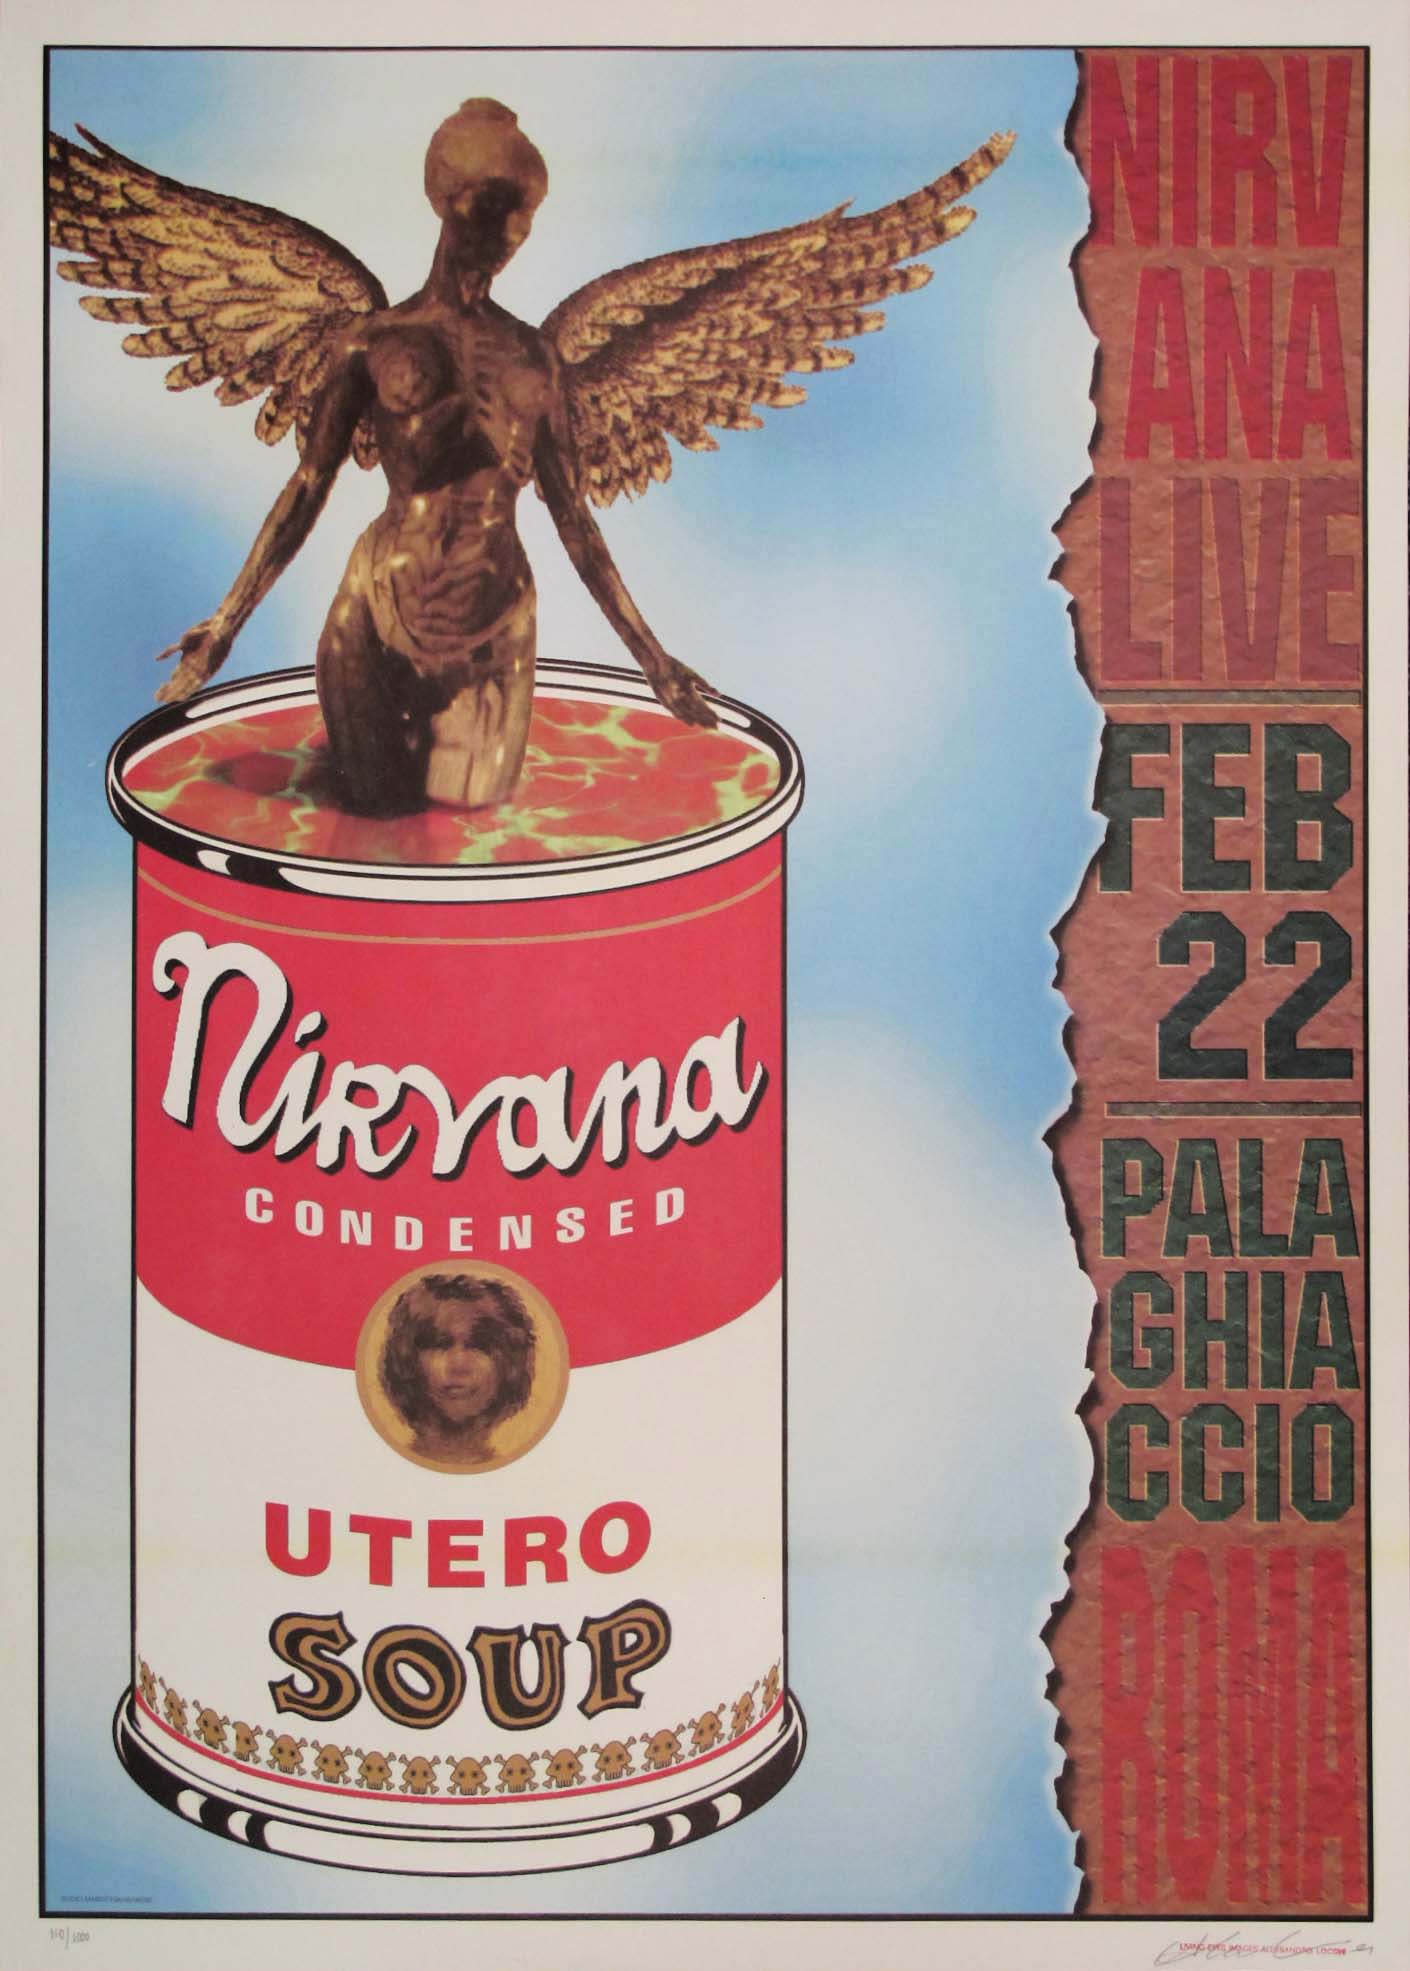 Nirvana Concert Poster